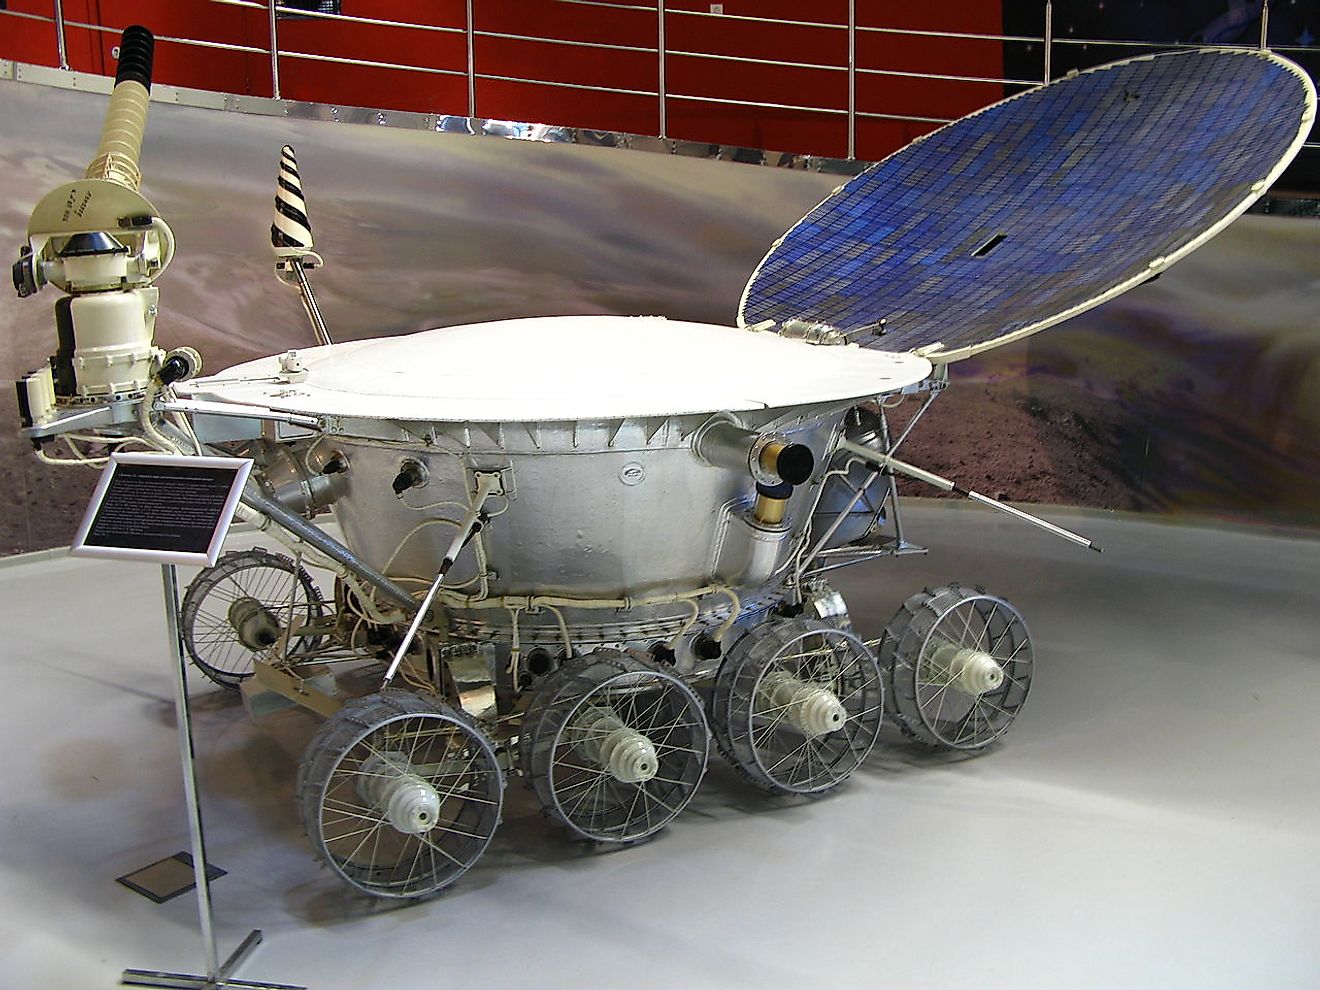 Soviet Lunokhod moonrover. Image credit: Petar Milošević/Wikimedia.org